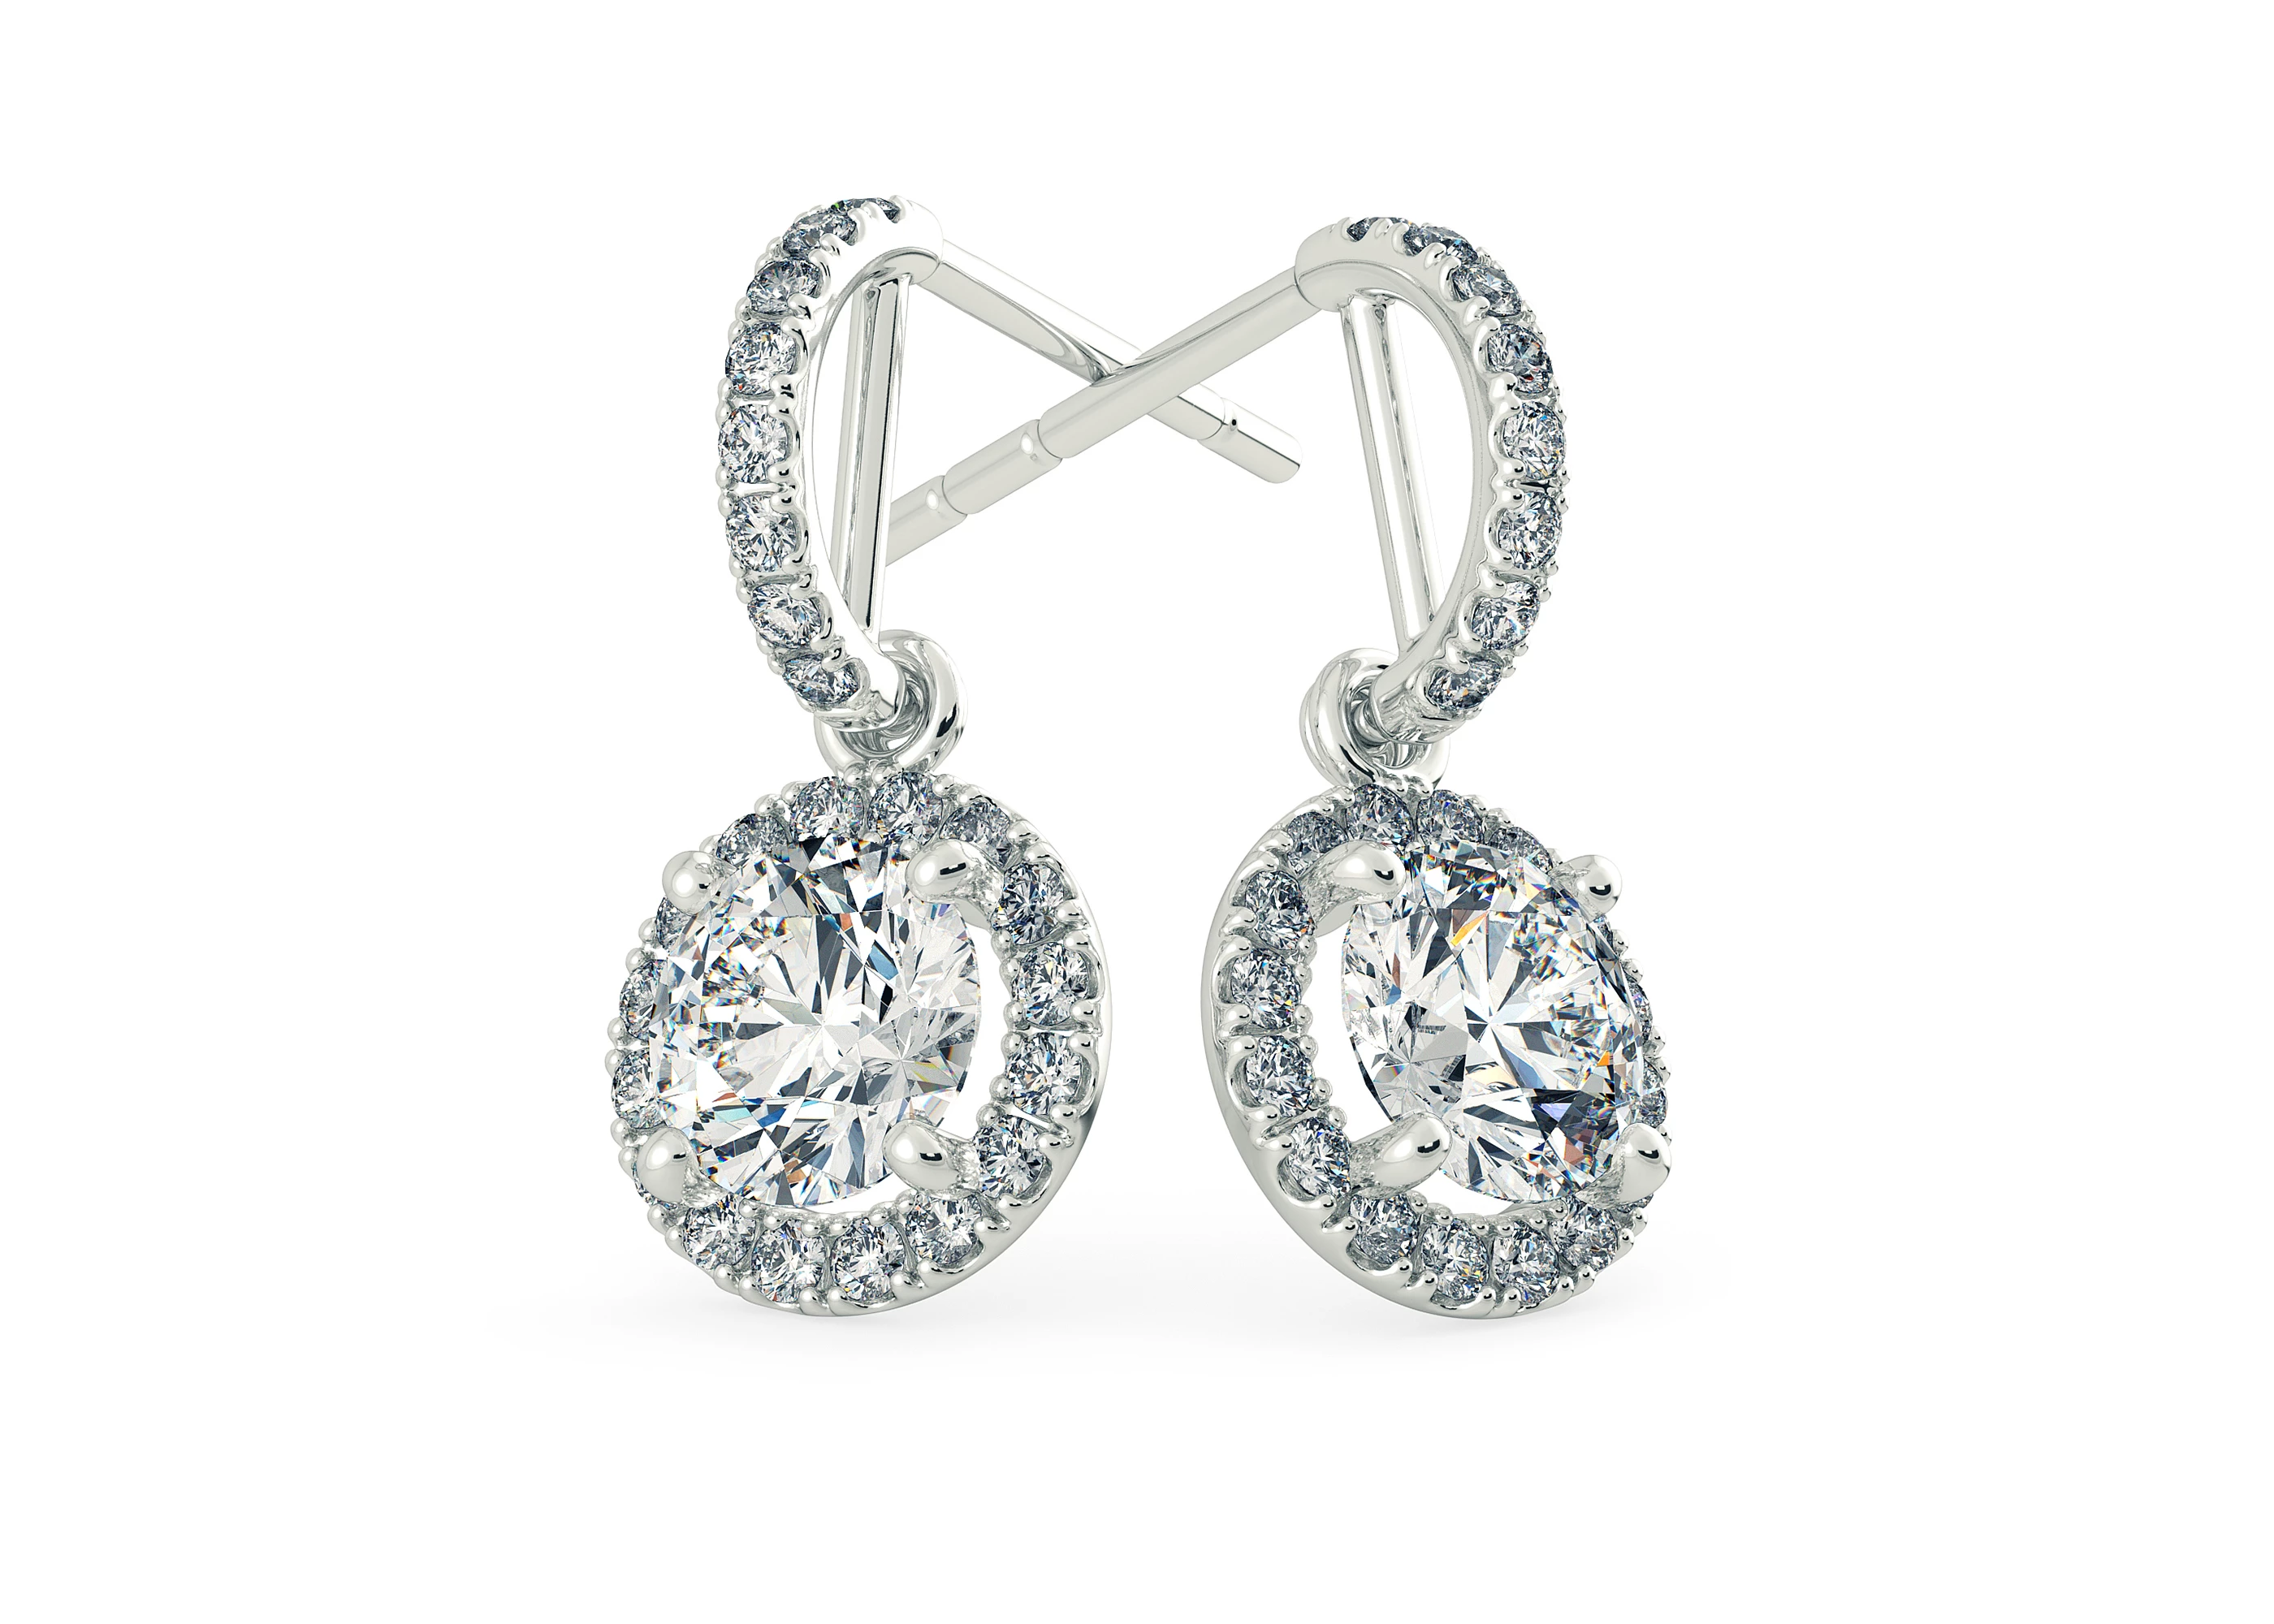 Bijou Round Brilliant Diamond Drop Earrings in 18K White Gold with Screw Backs